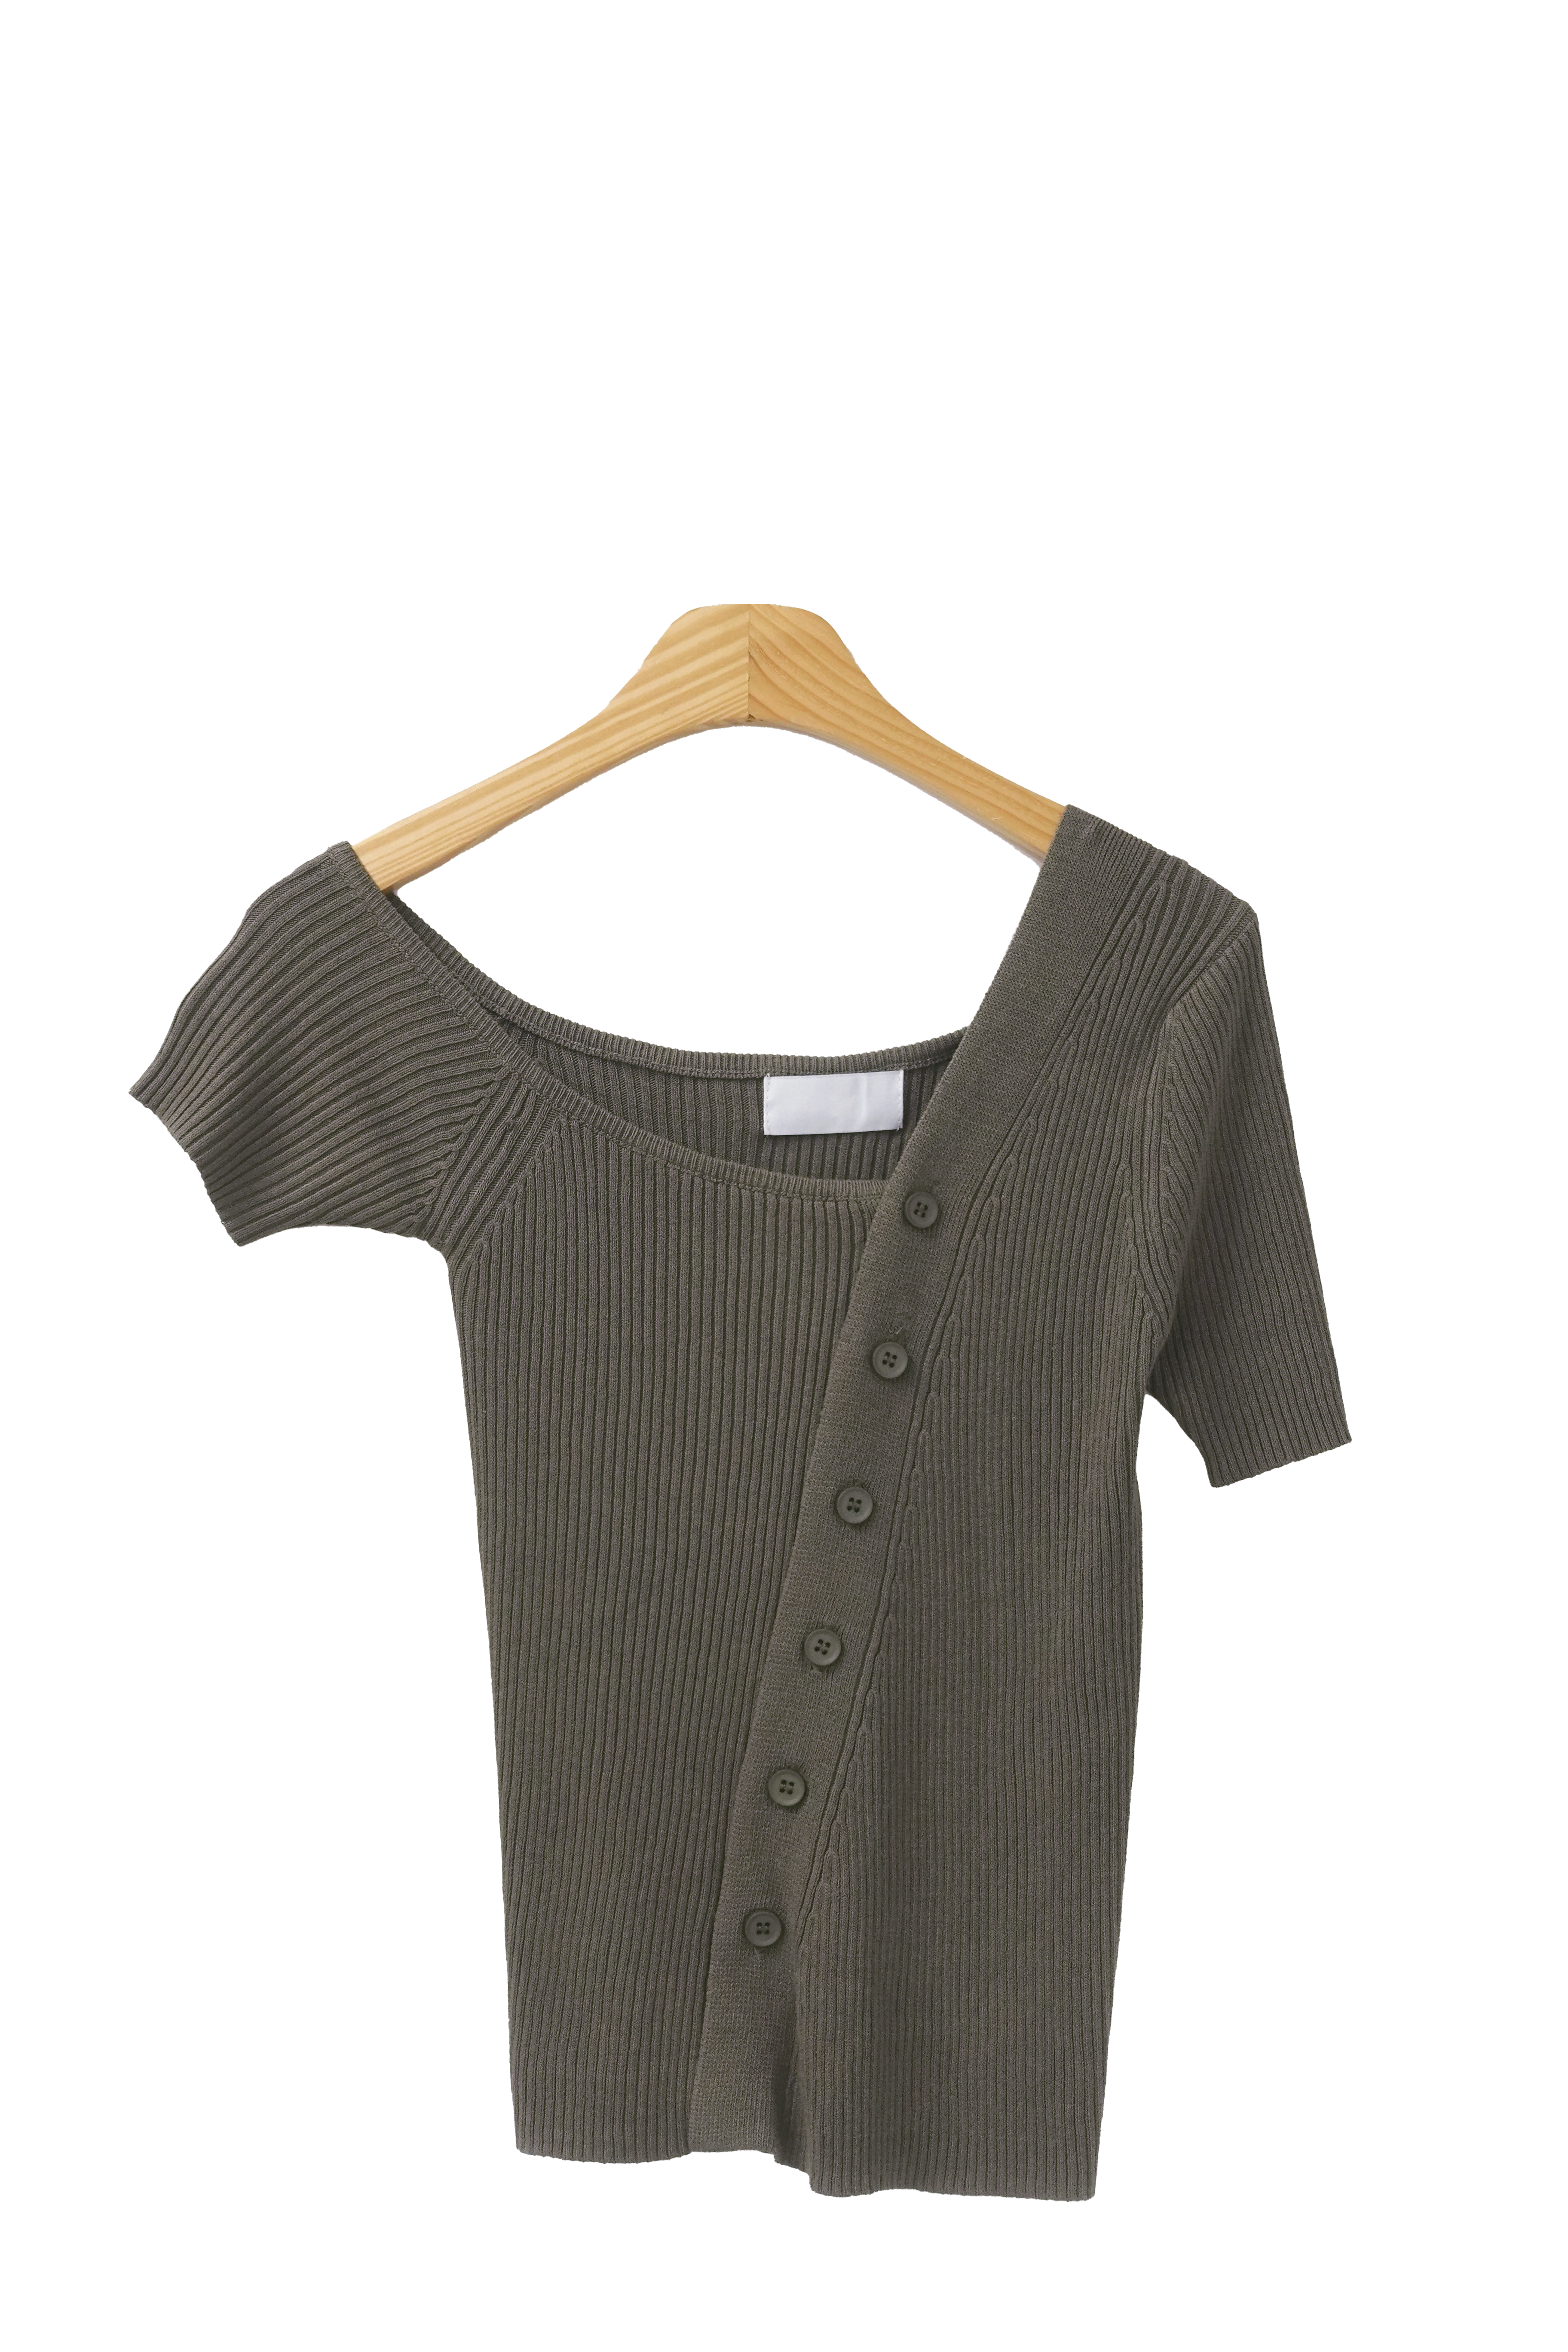 Nudi Unbalanced Off-Shoulder Diagonal Summer Short-Sleeved Knitwear (3 colors)